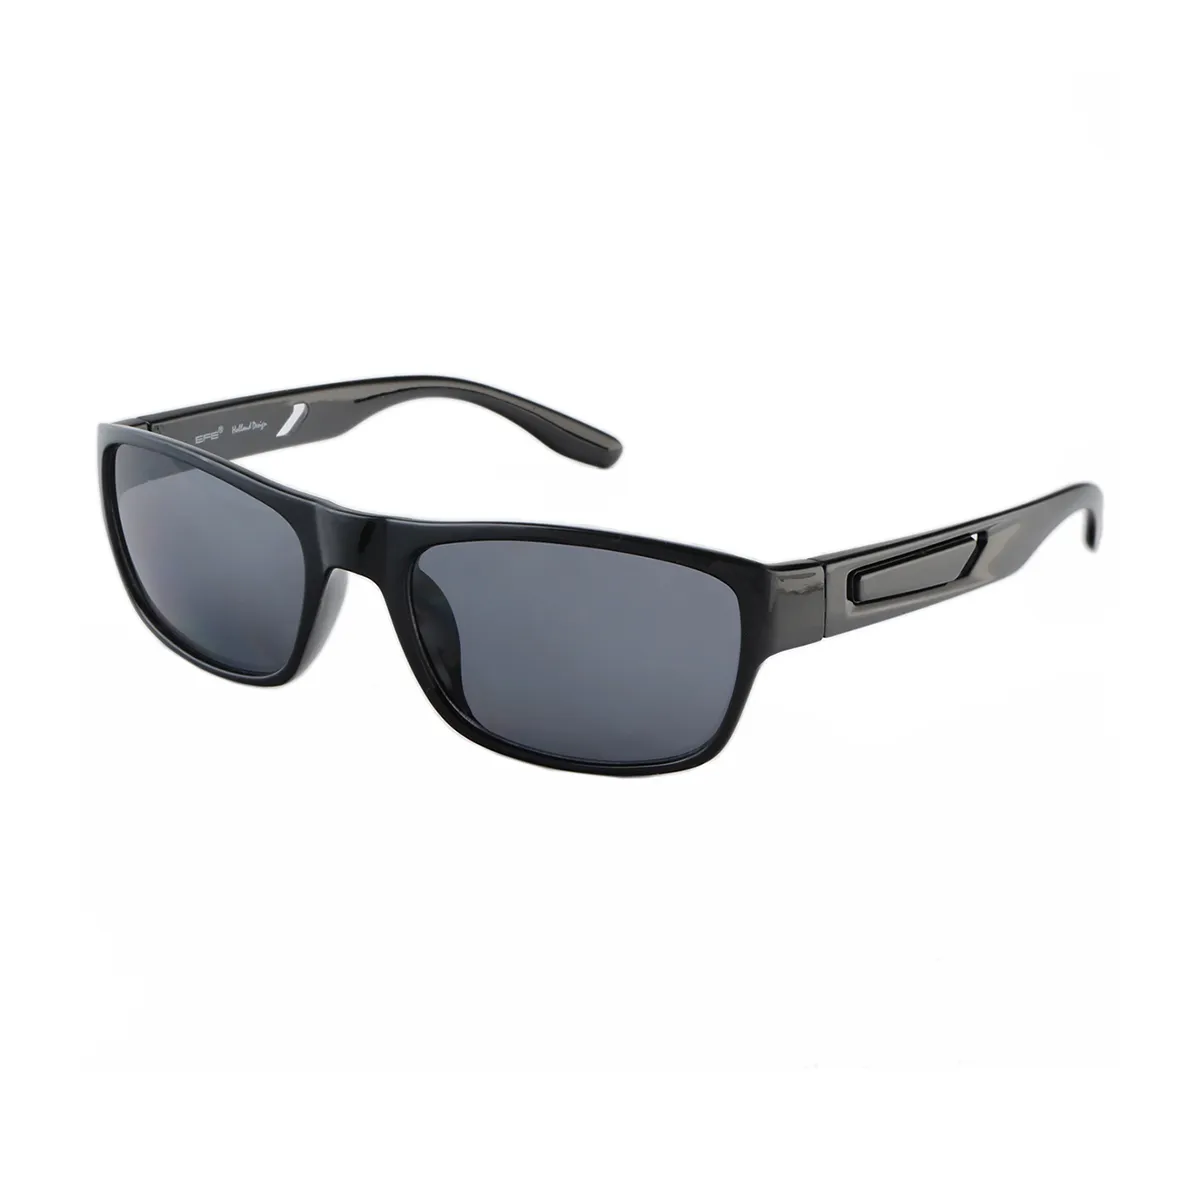 Jacques - Rectangle Black Sunglasses for Men